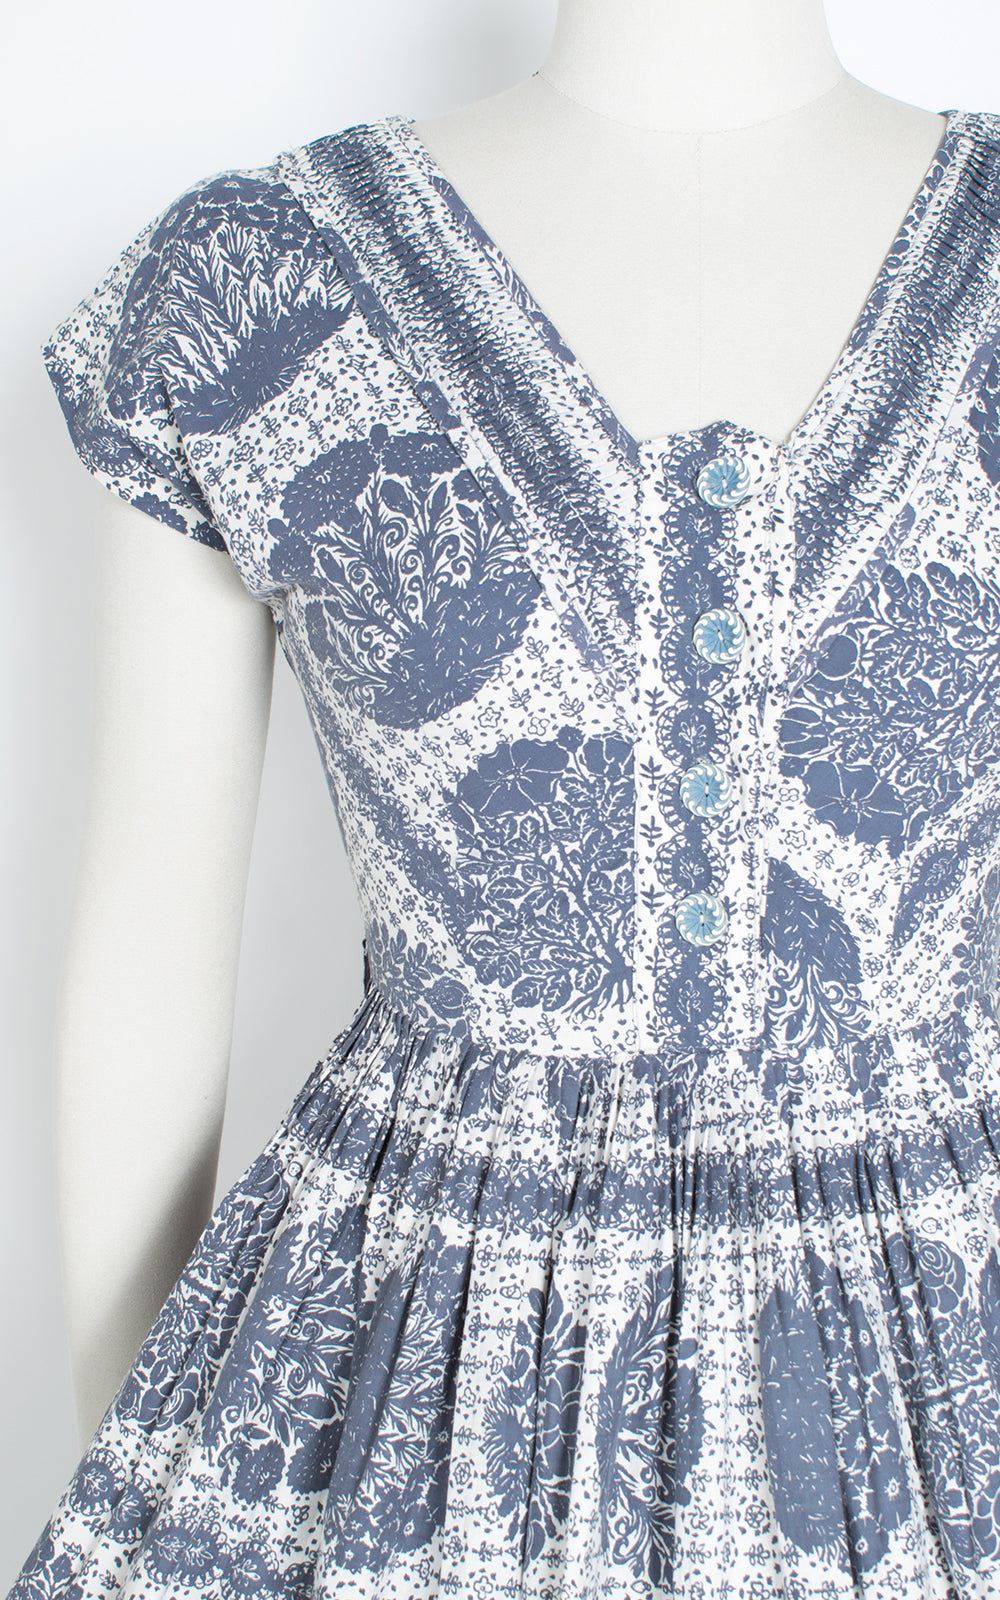 1950s Floral Illustrated Cotton Shirtwaist Dress